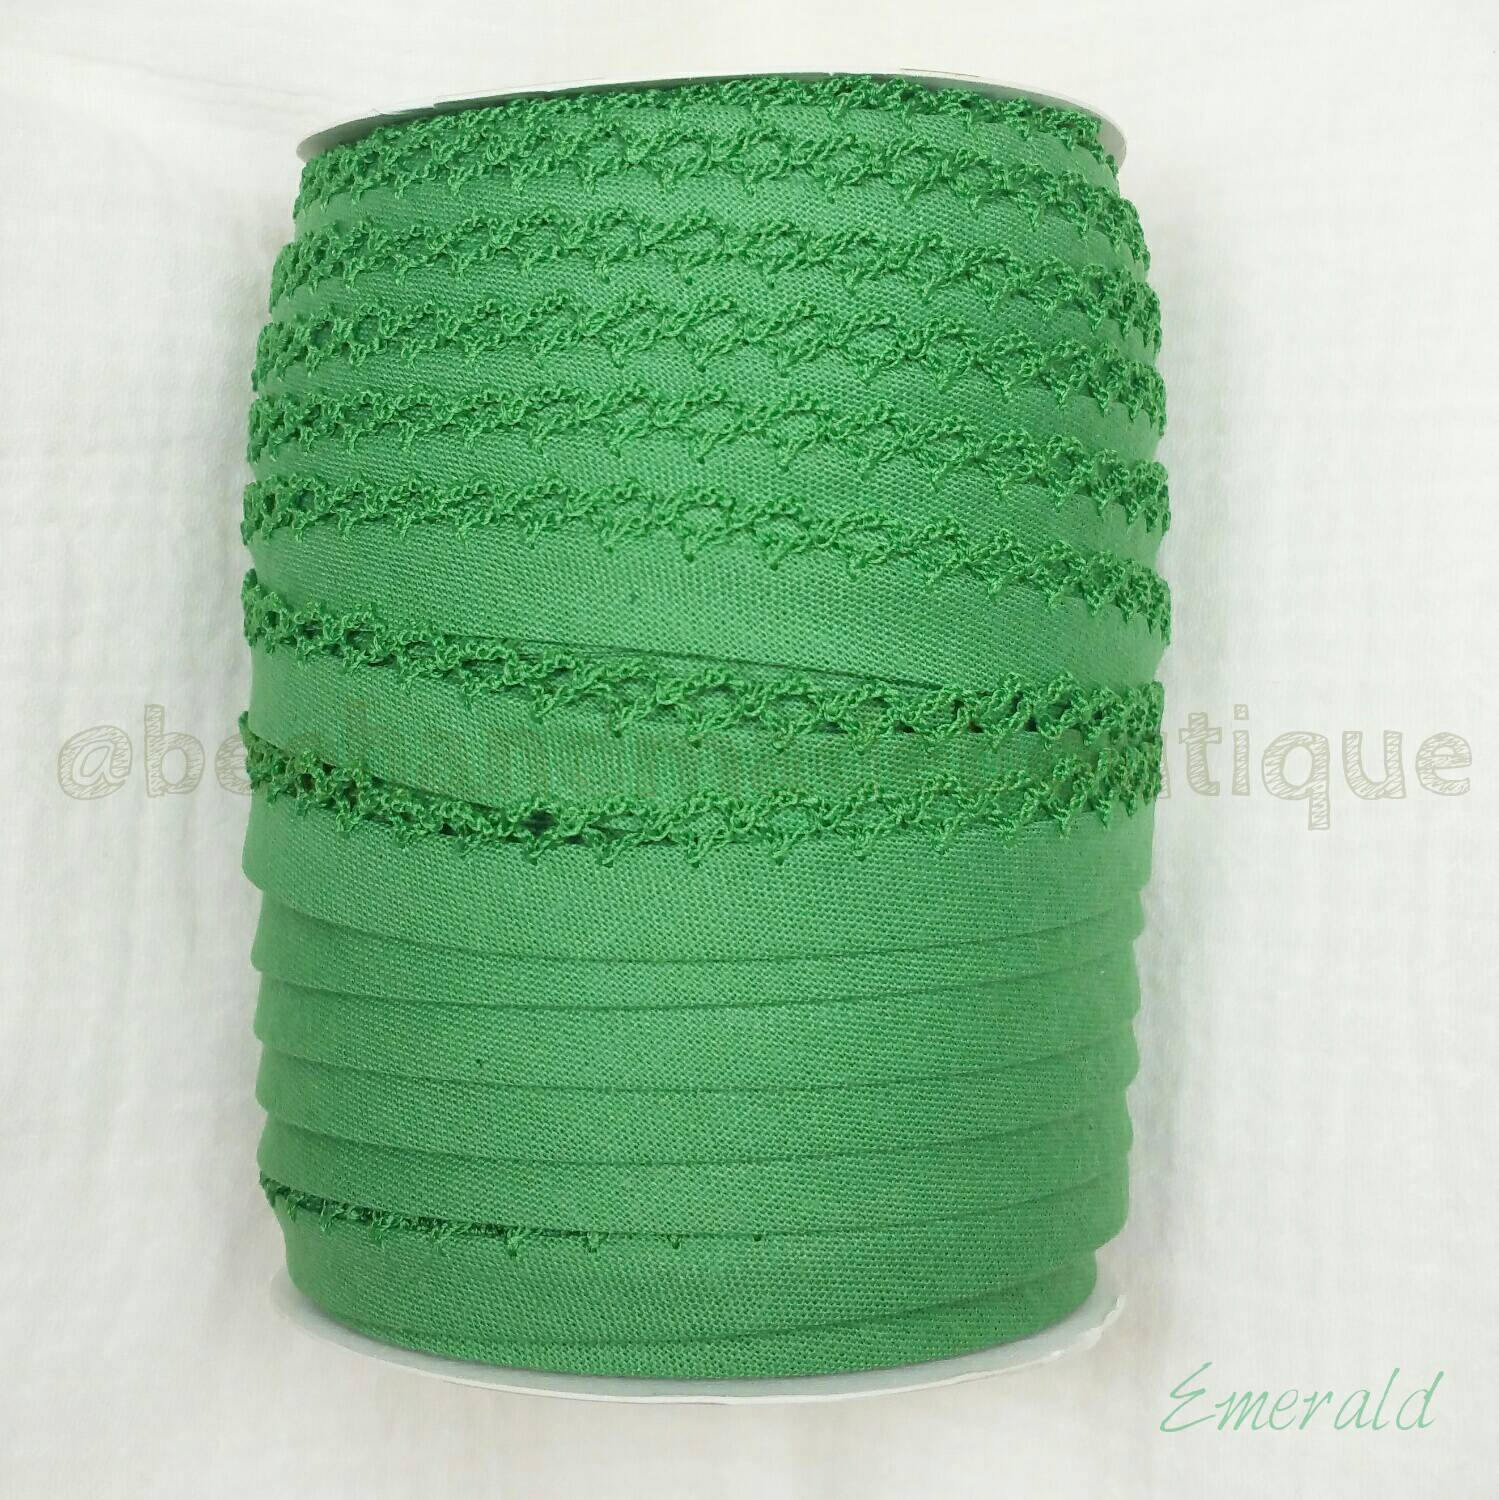 Green Picot Bias Tape, Double Fold Bias Tape, Crochet Edge Bias Tape, Quilt Binding, EMERALD Crochet Edge Bias Tape By the Yard, Green Lace